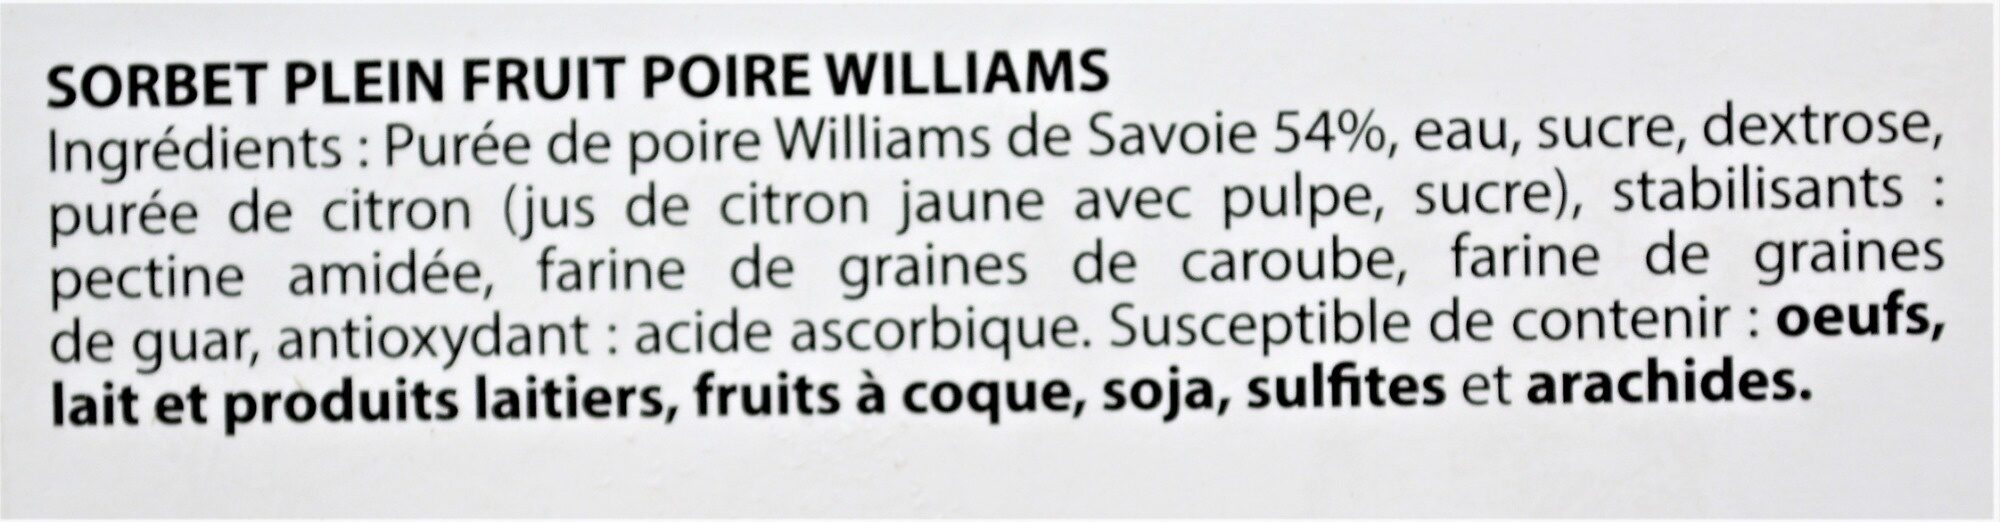 Sorbet plein fruit POIRE WILLIAMS, 54% de fruit - Ingredientes - fr